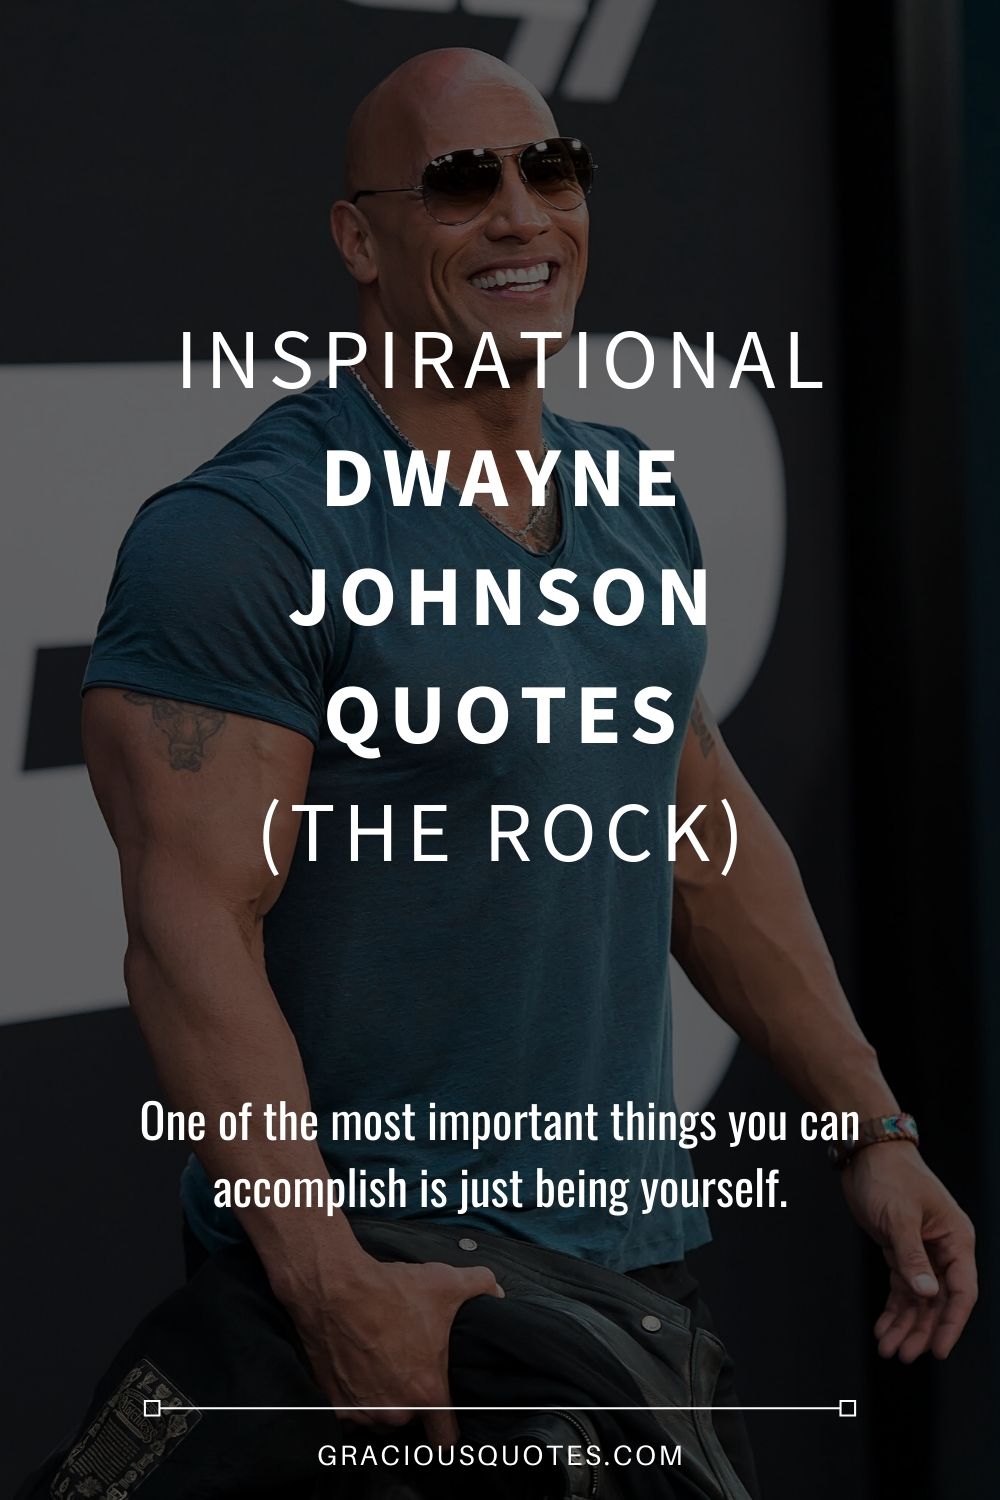 Inspirational Dwayne Johnson Quotes (THE ROCK)